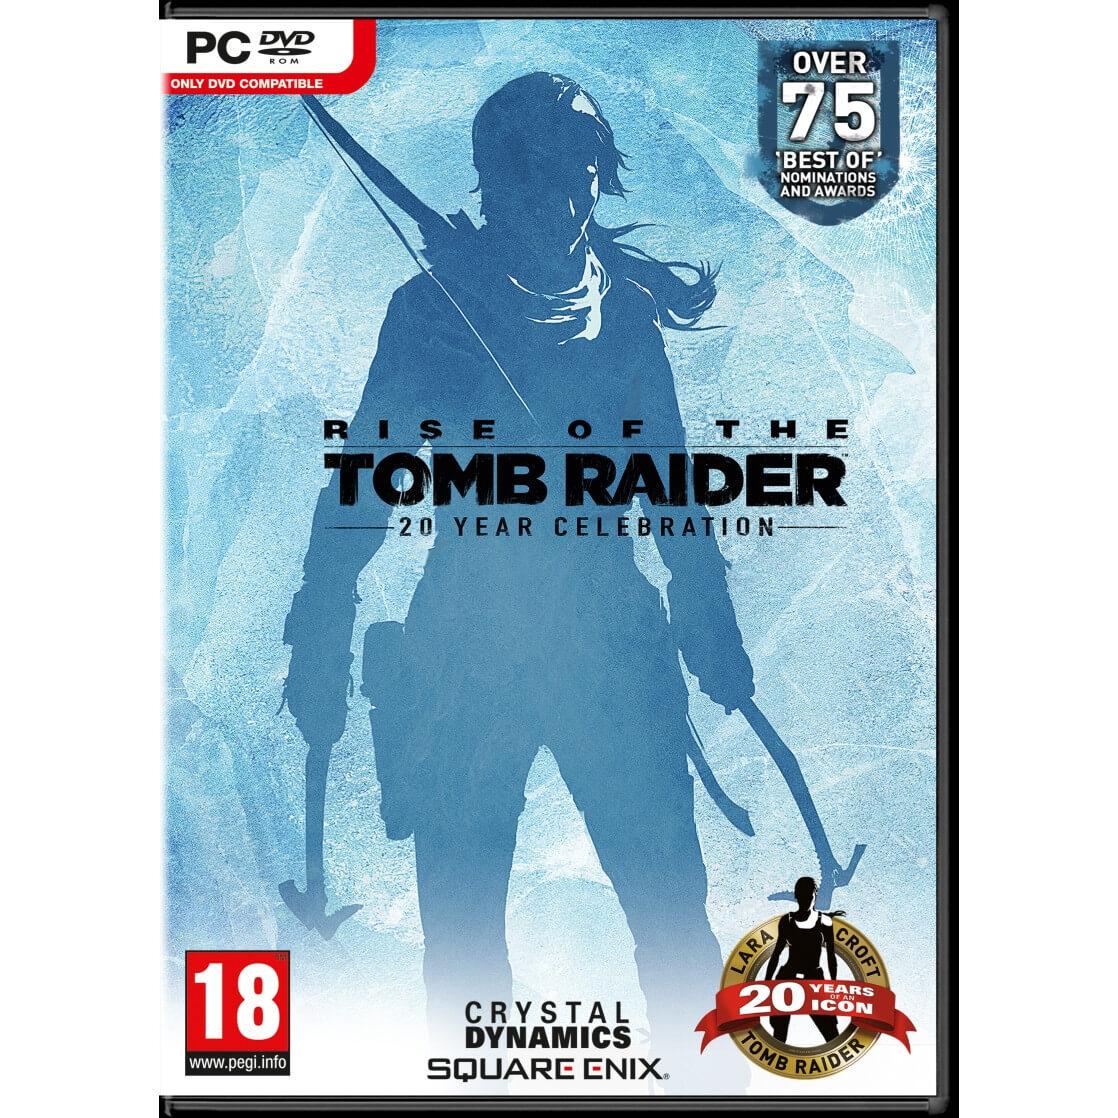  Joc PC Rise of the Tomb Raider: 20 Year Celebration 